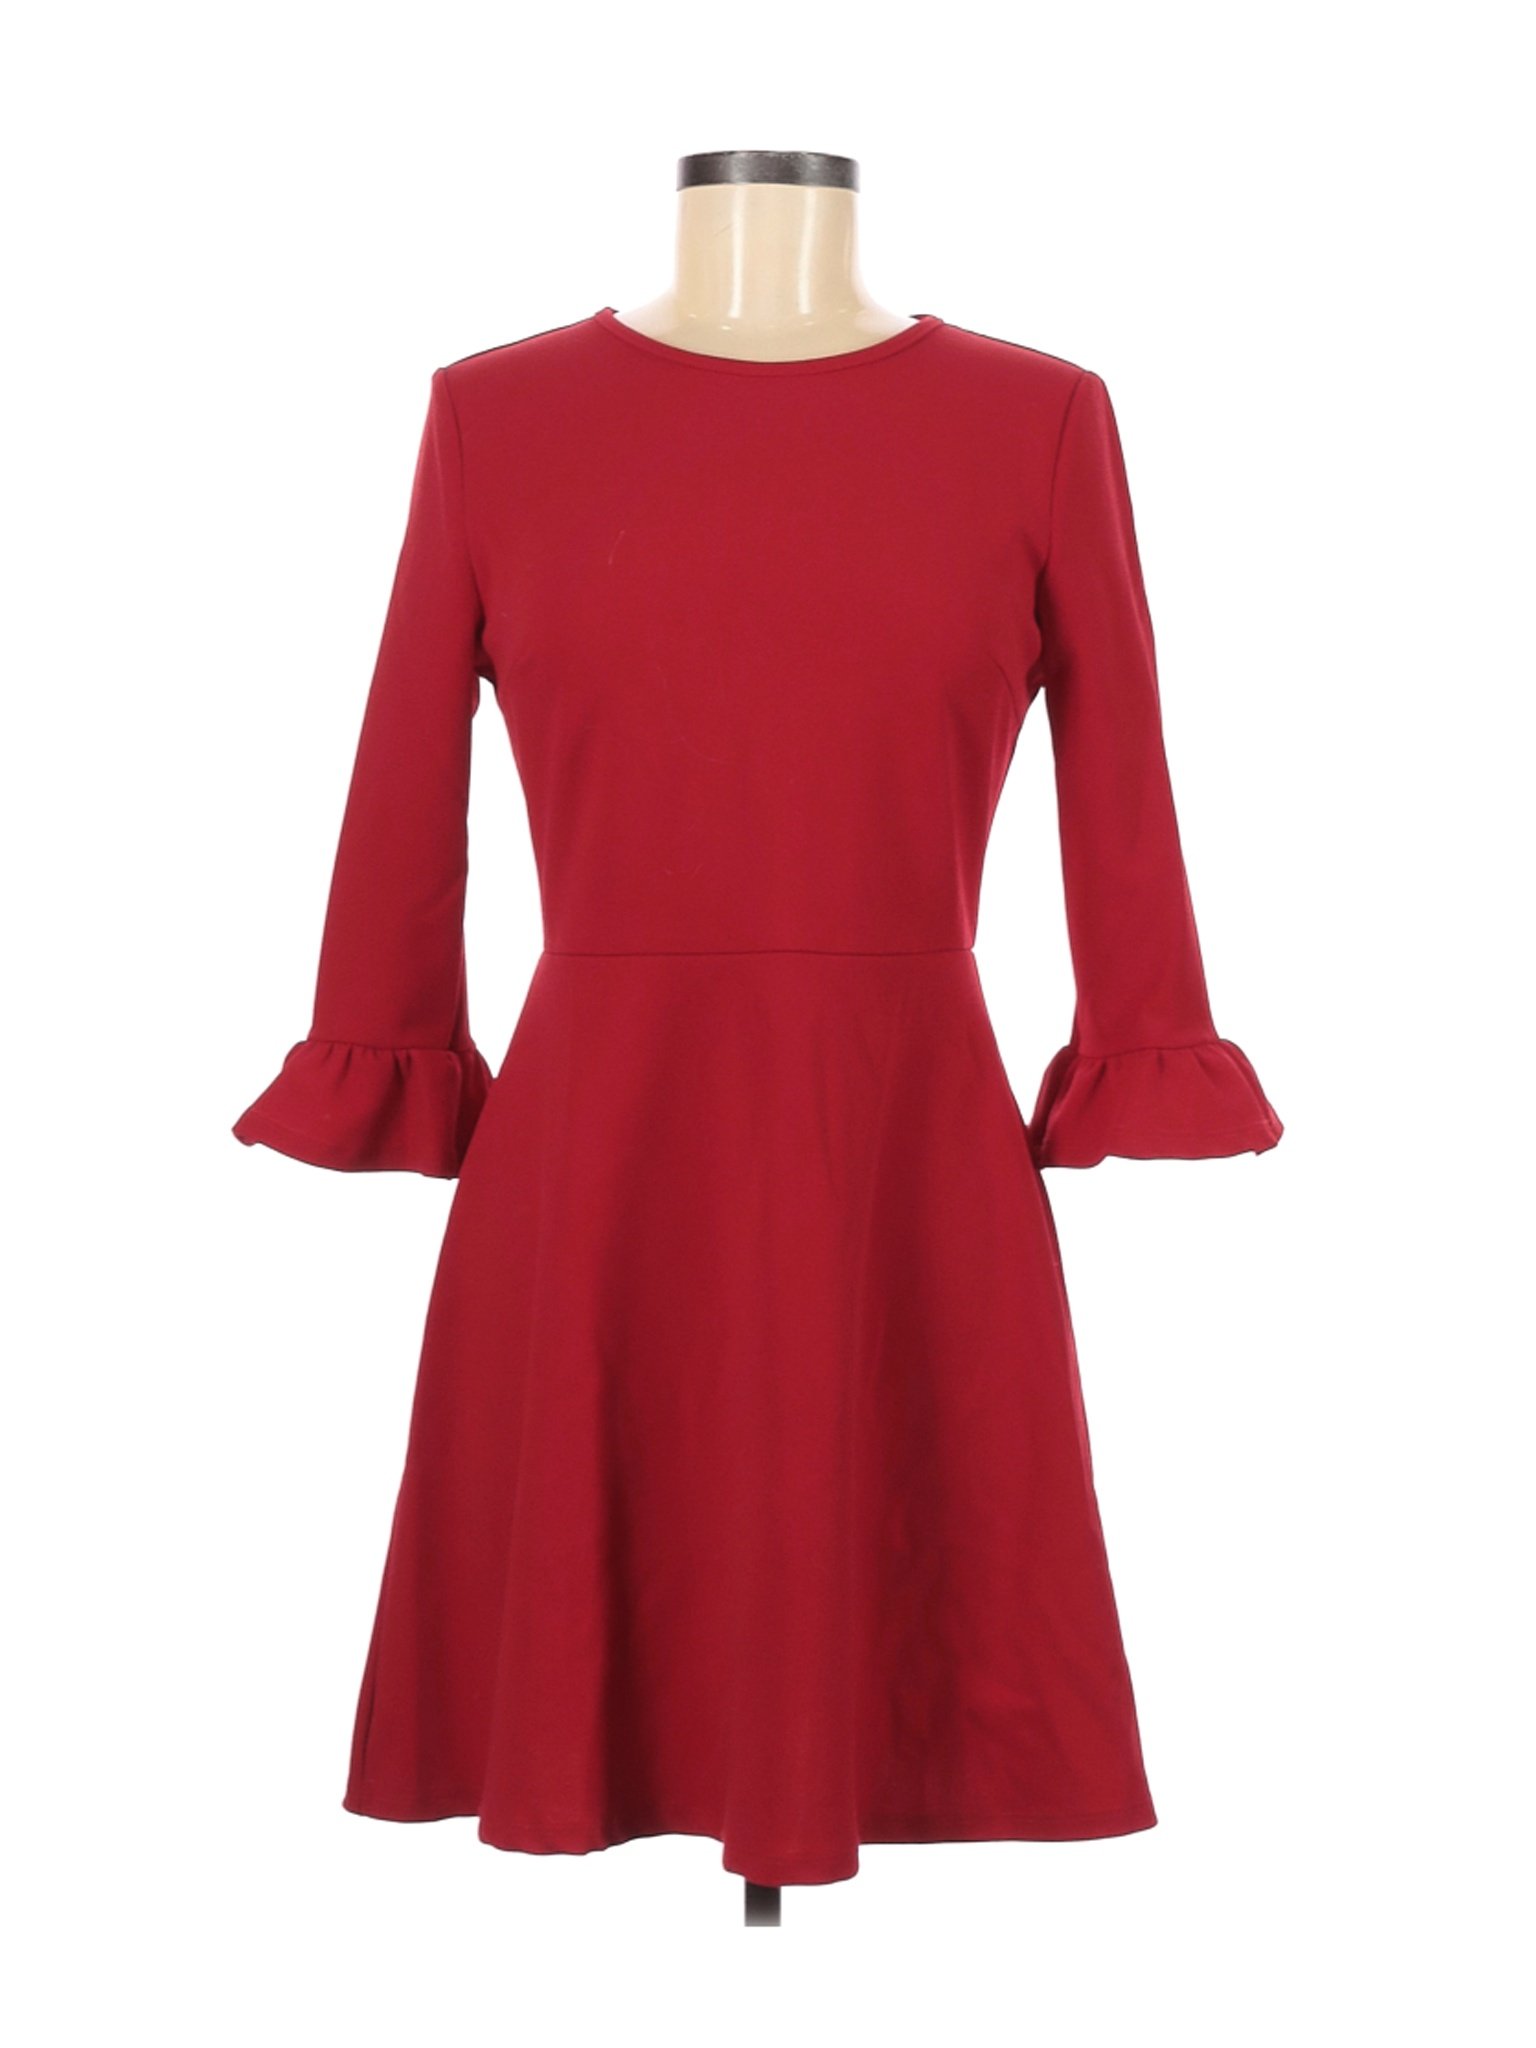 Shein Women Red Casual Dress M | eBay